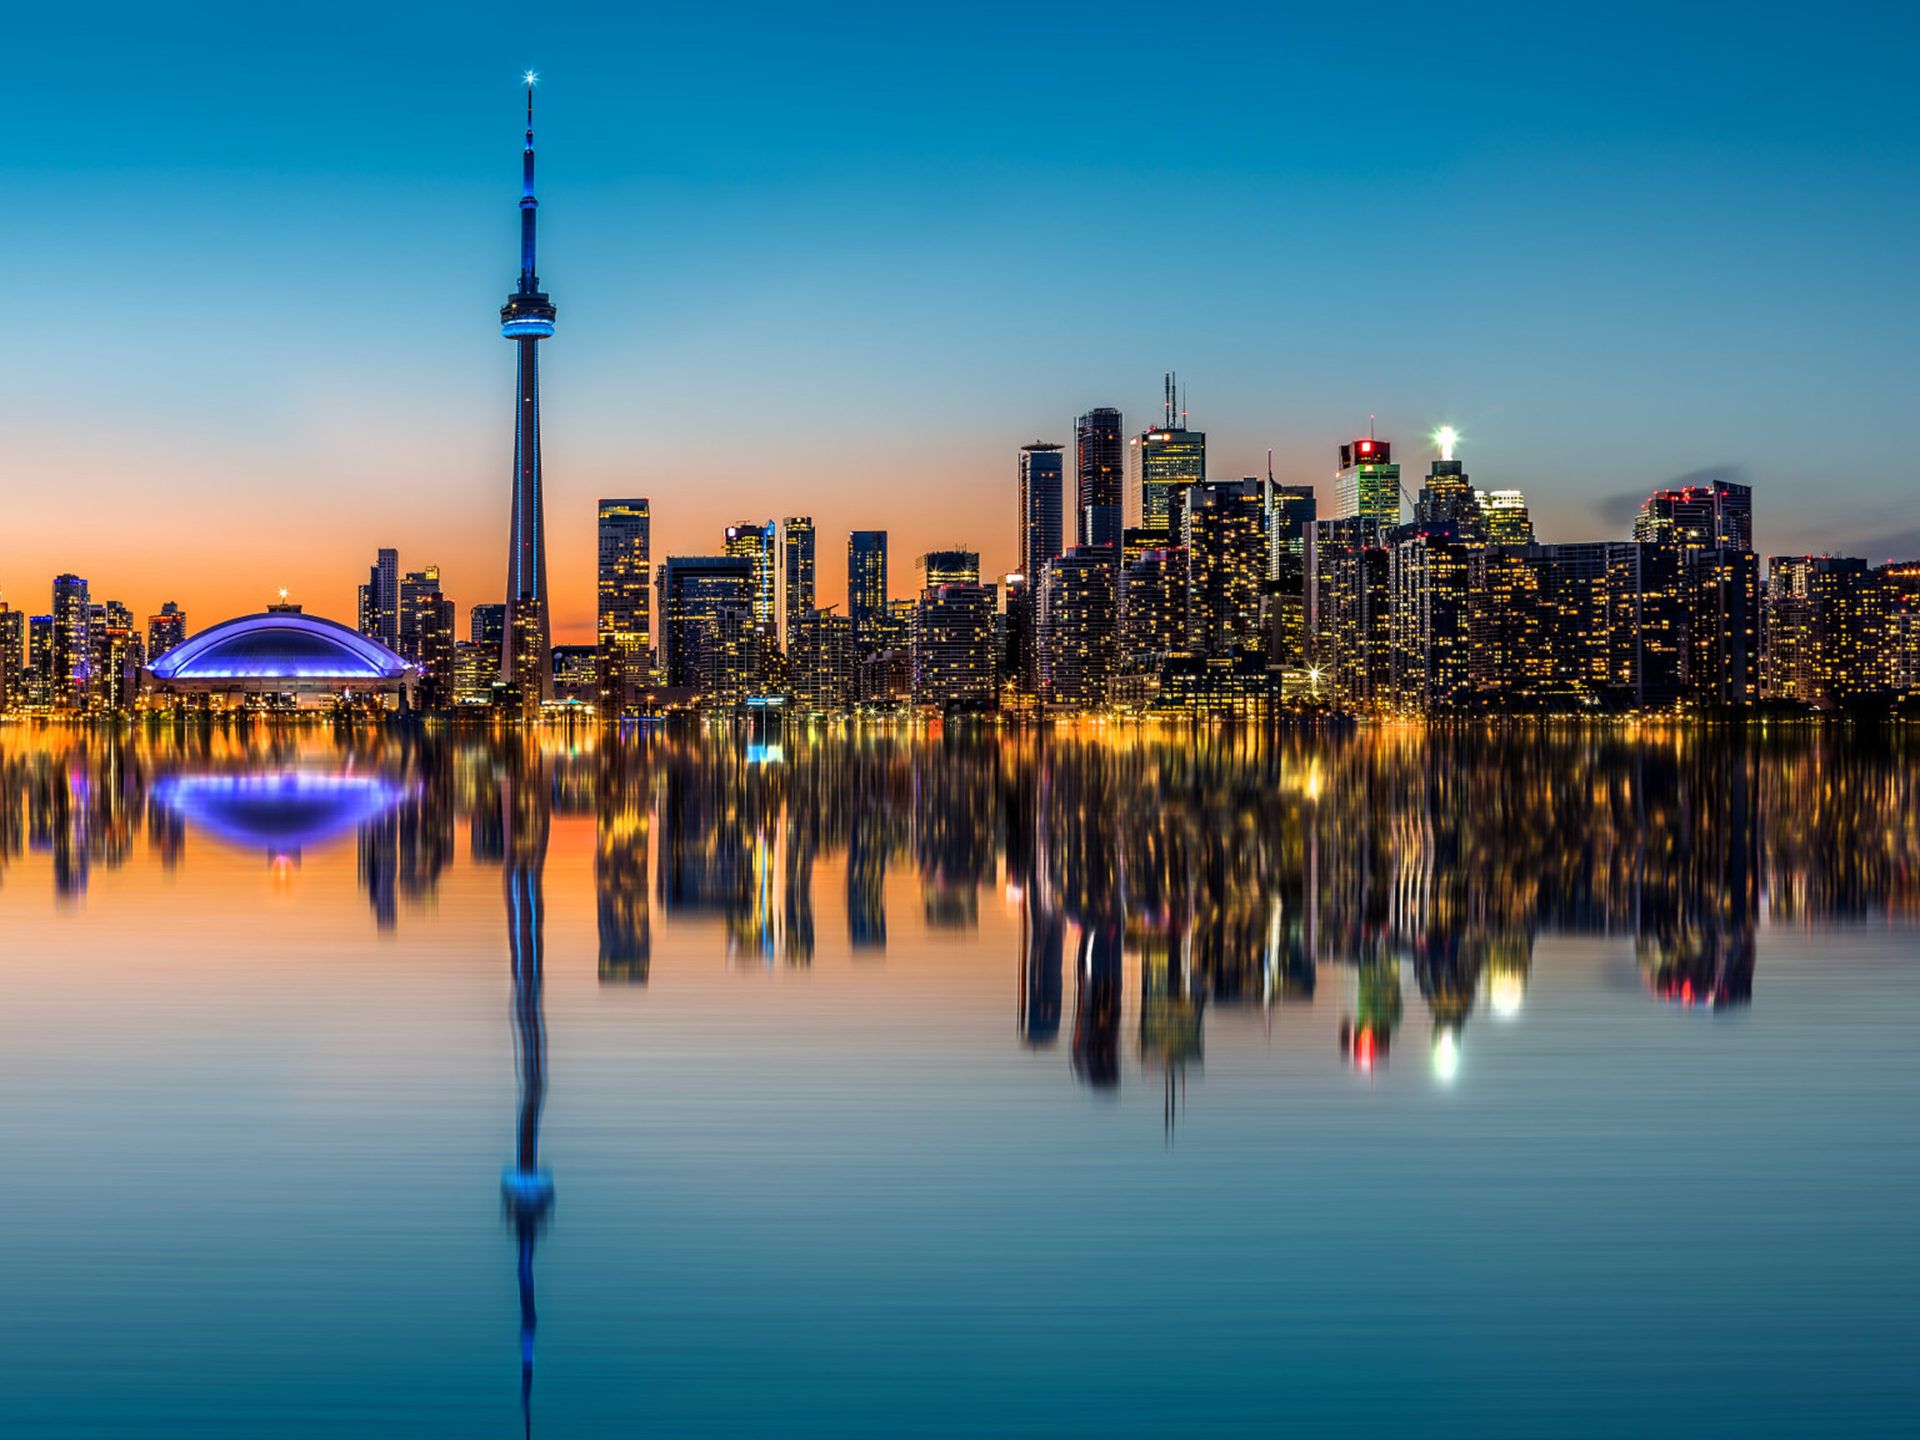 Toronto Skyline Reflection Of Buildings In Harbor Bay Harbor Bay Toronto Canada Night Landscape HD Wallpaper For Tablets Free Download, Wallpaper13.com